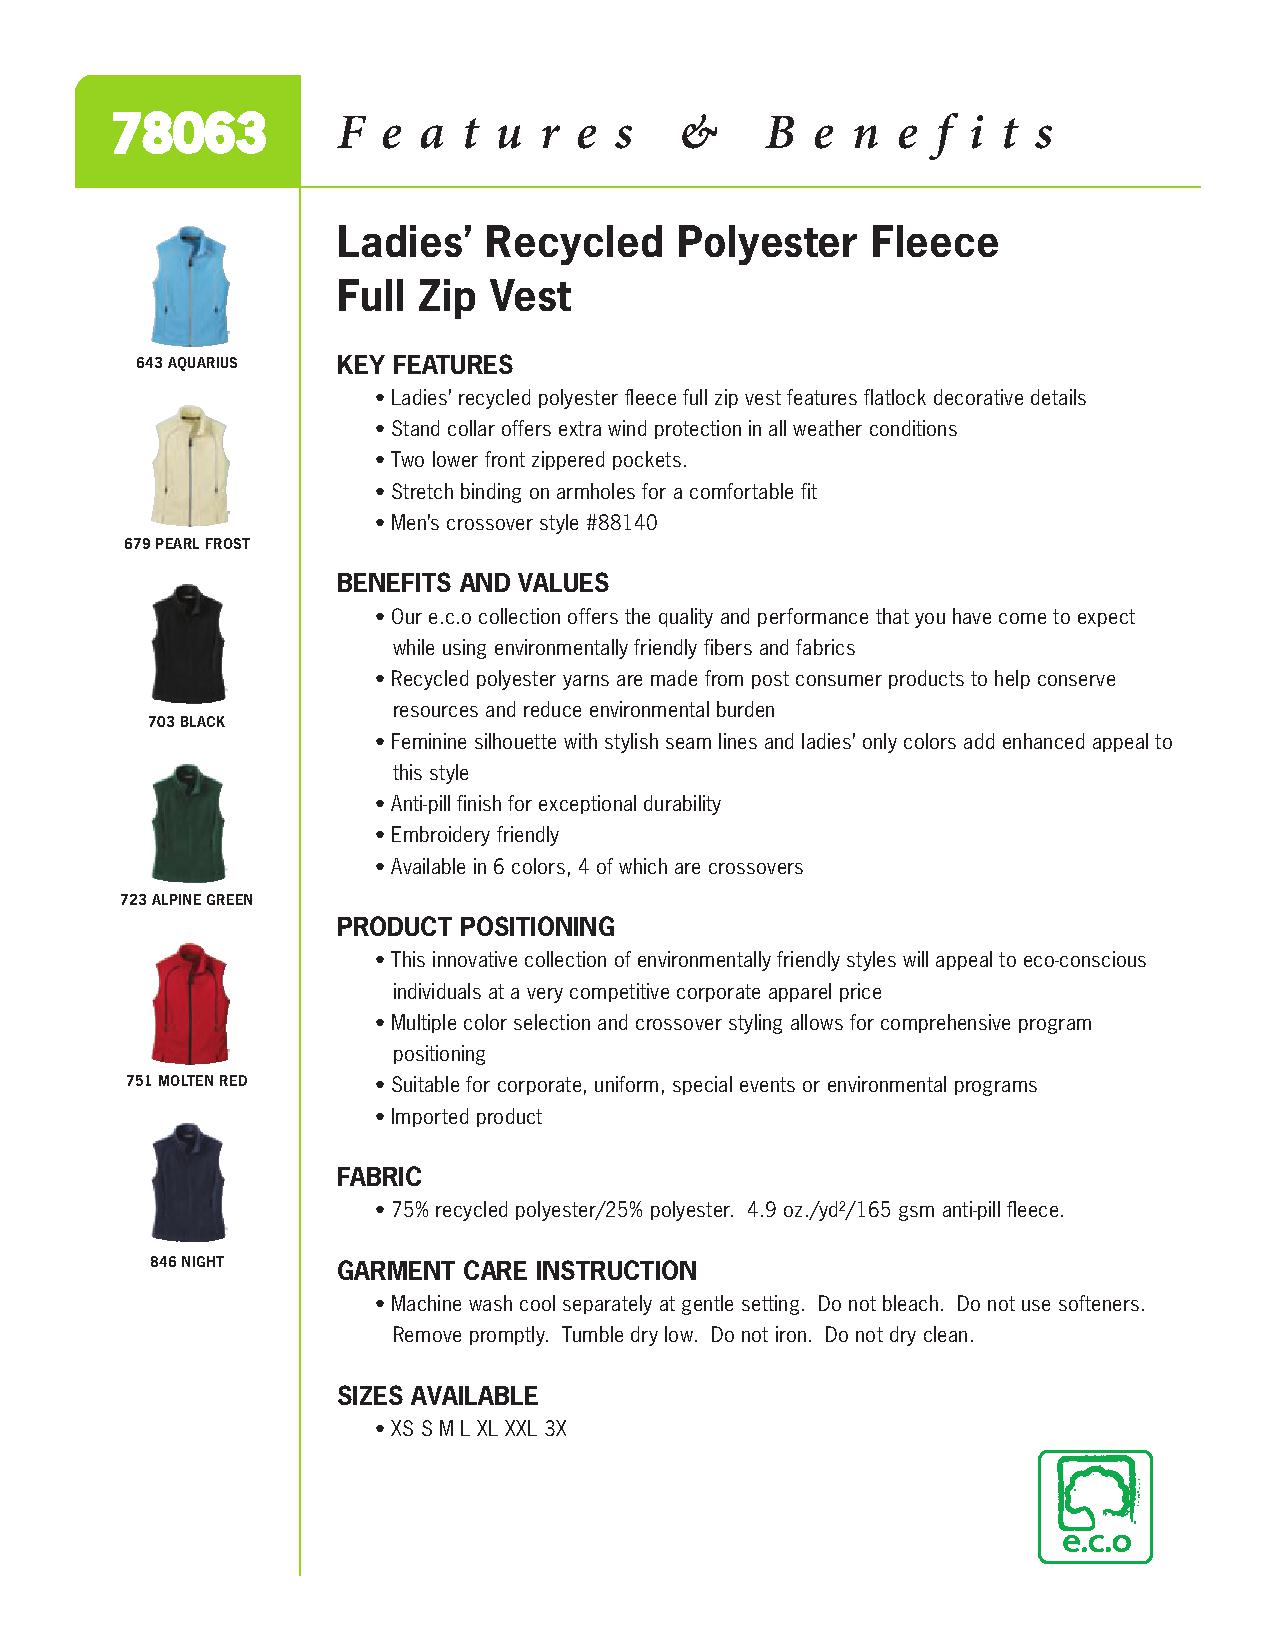 Ash City e.c.o Fleece 78063 - Ladies' Recycled Fleece Full-Zip Vest